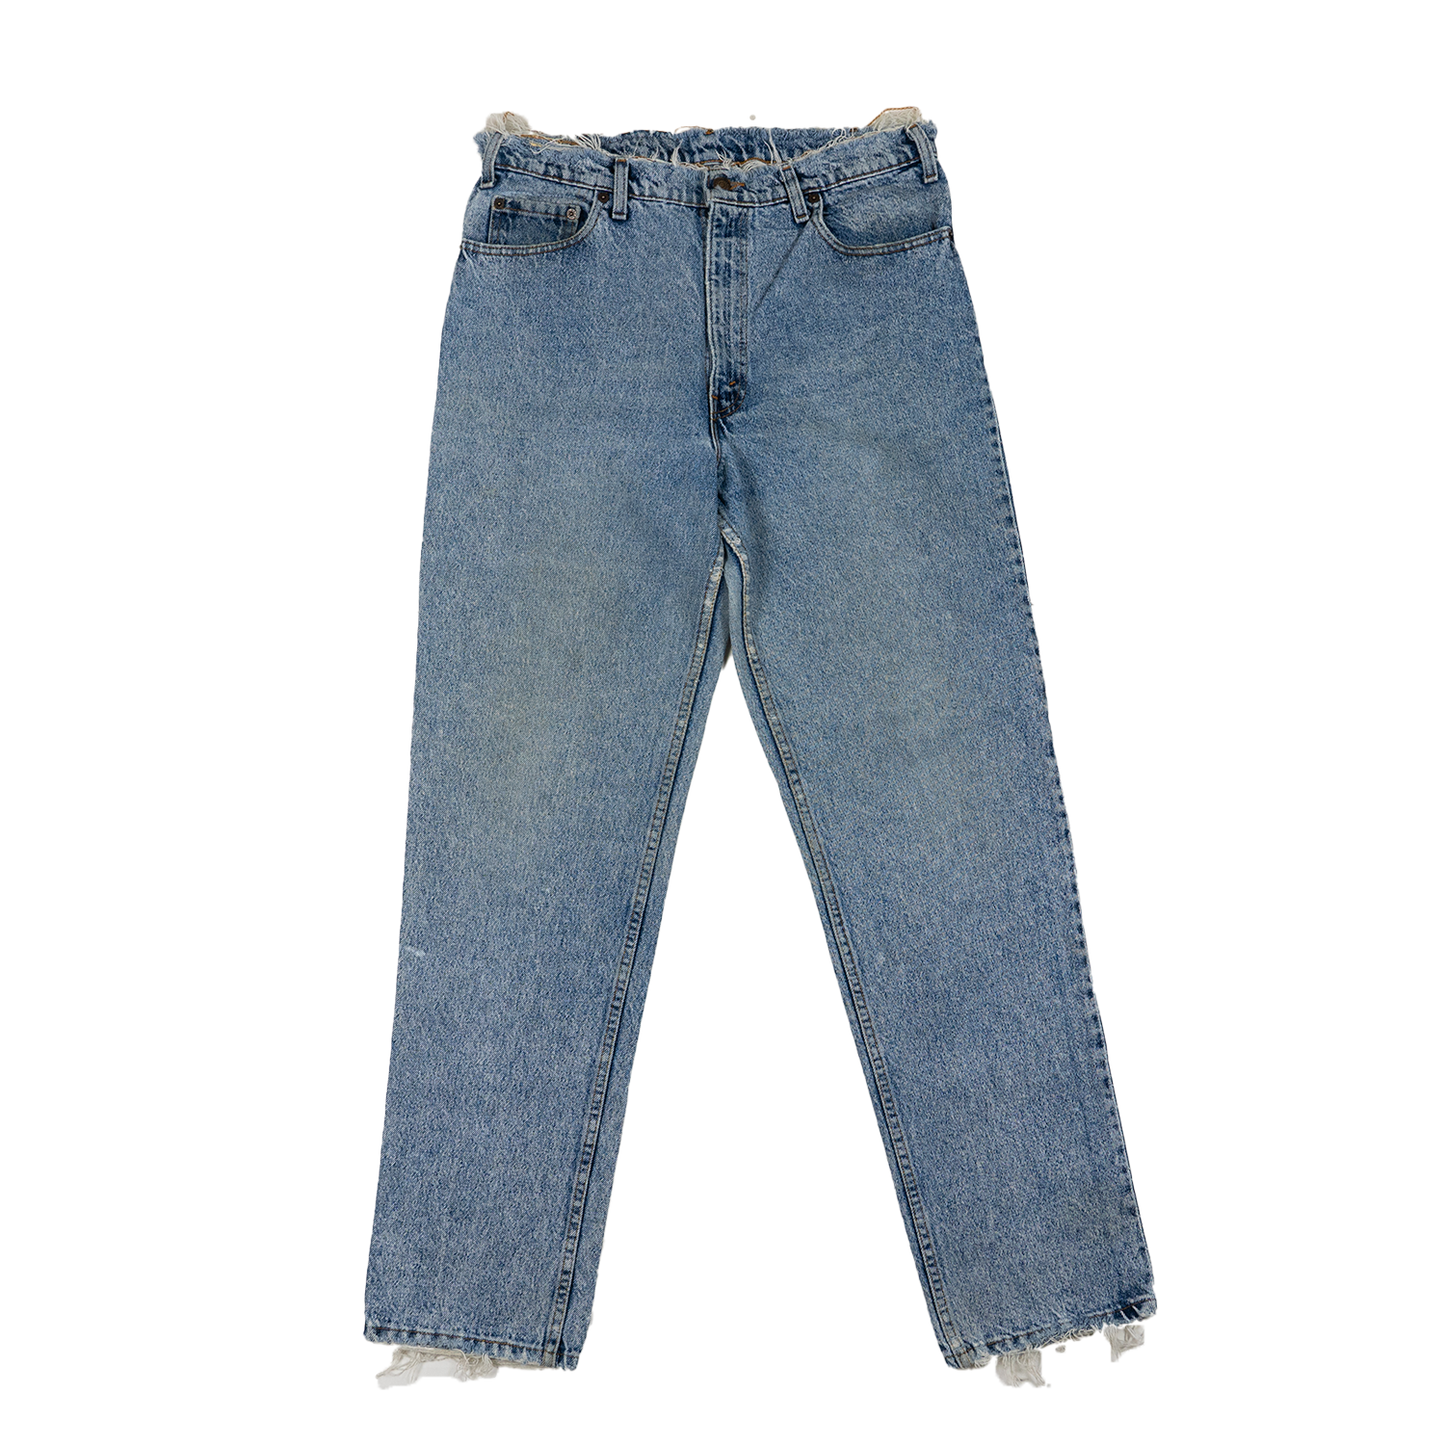 Levi's 540 Distressed Dark Wash Jeans - 90s